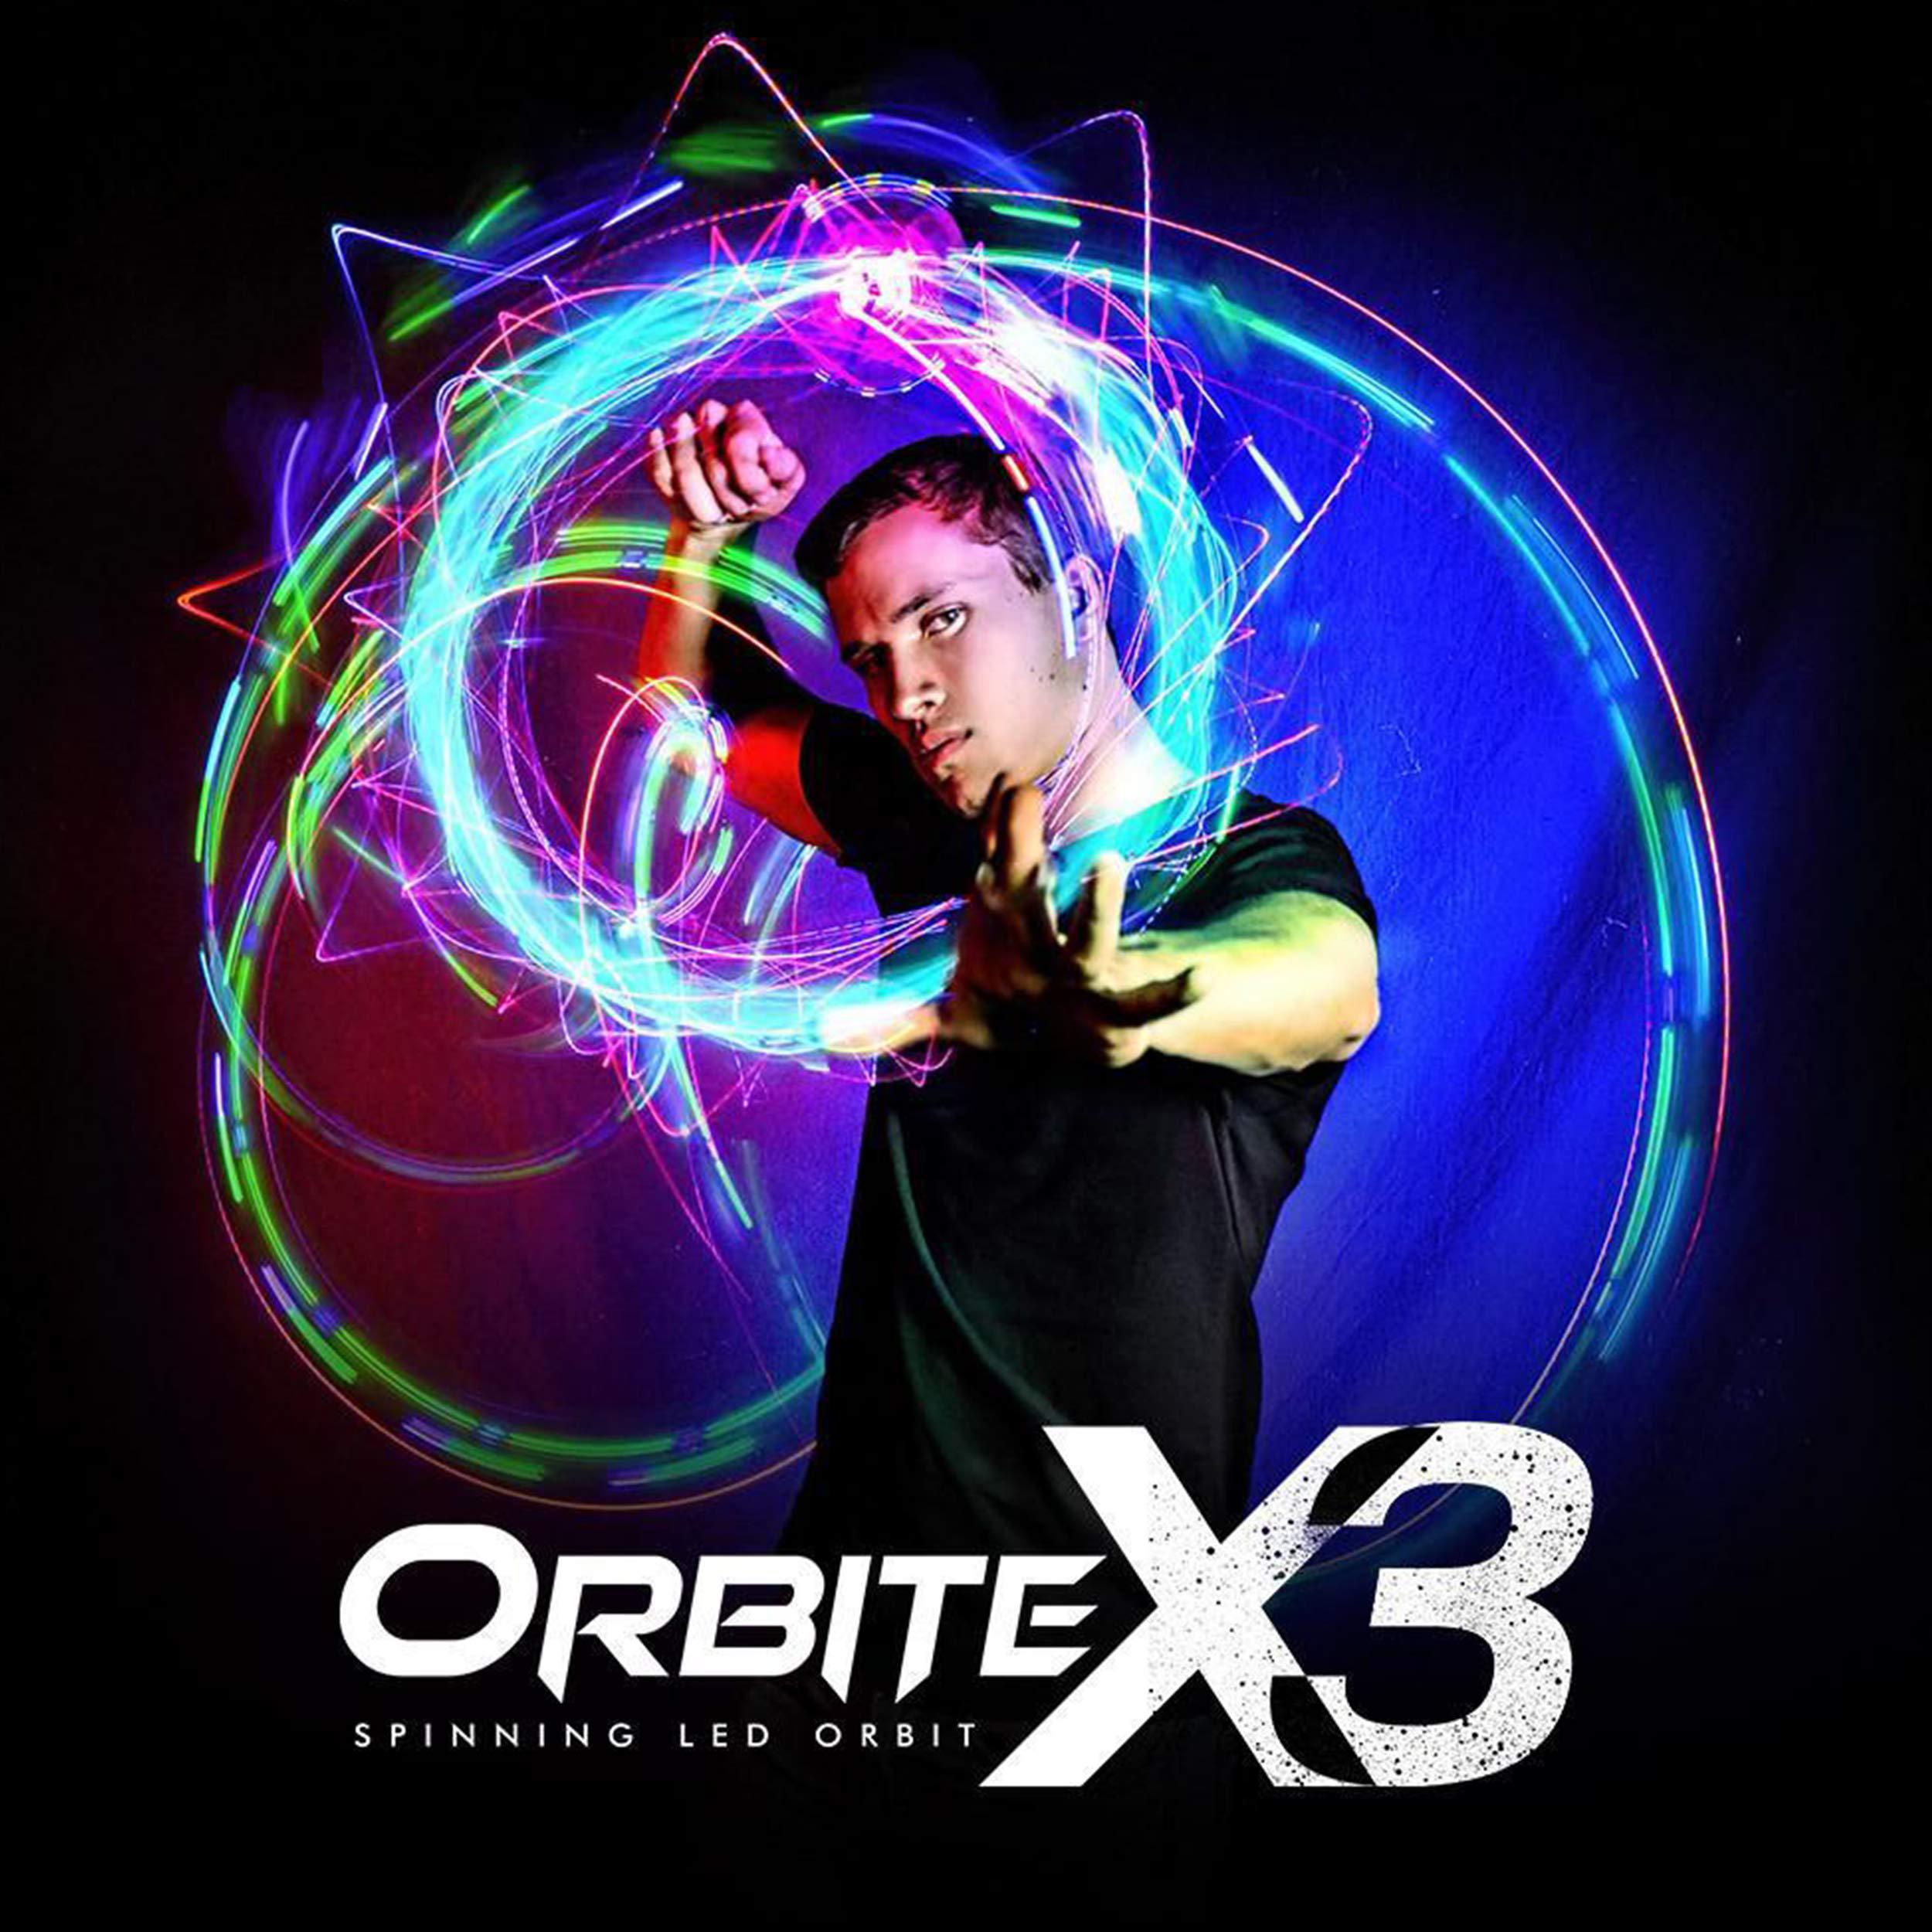 EmazingLights 4-LED Spinning Orbit: Orbite-X3 Lightshow Orbital Rave Light Toy EmazingLights